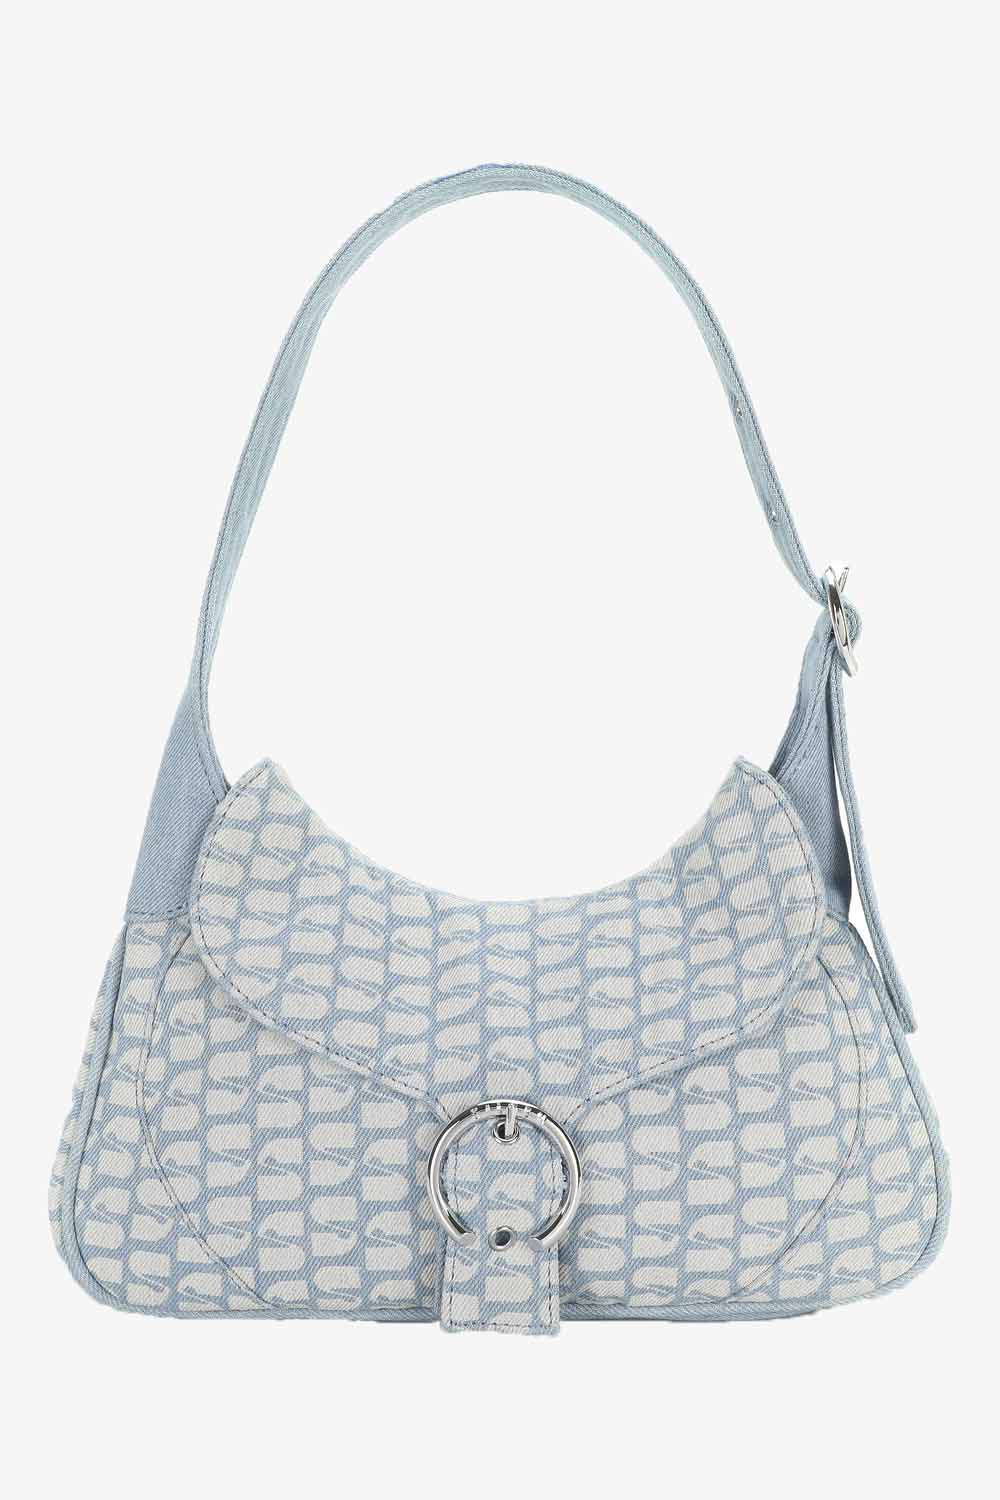 Shoulder Bag Buckle - Light Icon Denim - Silfen Studio - Blå Size 498.00 DKK - Boutiquenoir Fashion